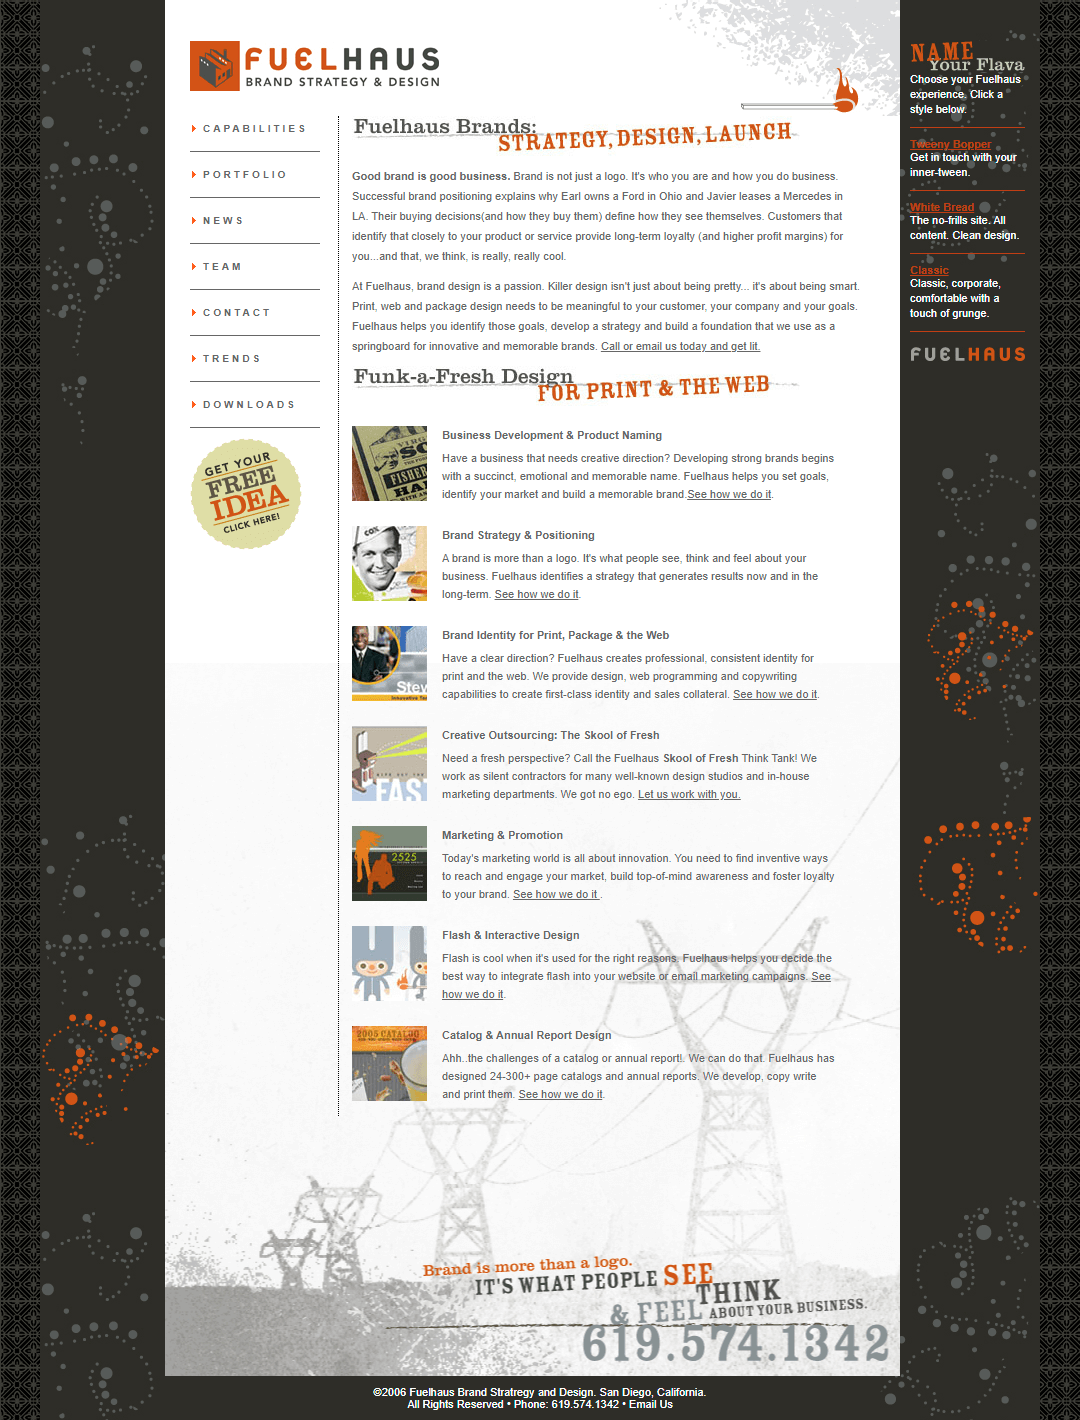 Fuelhaus website in 2006